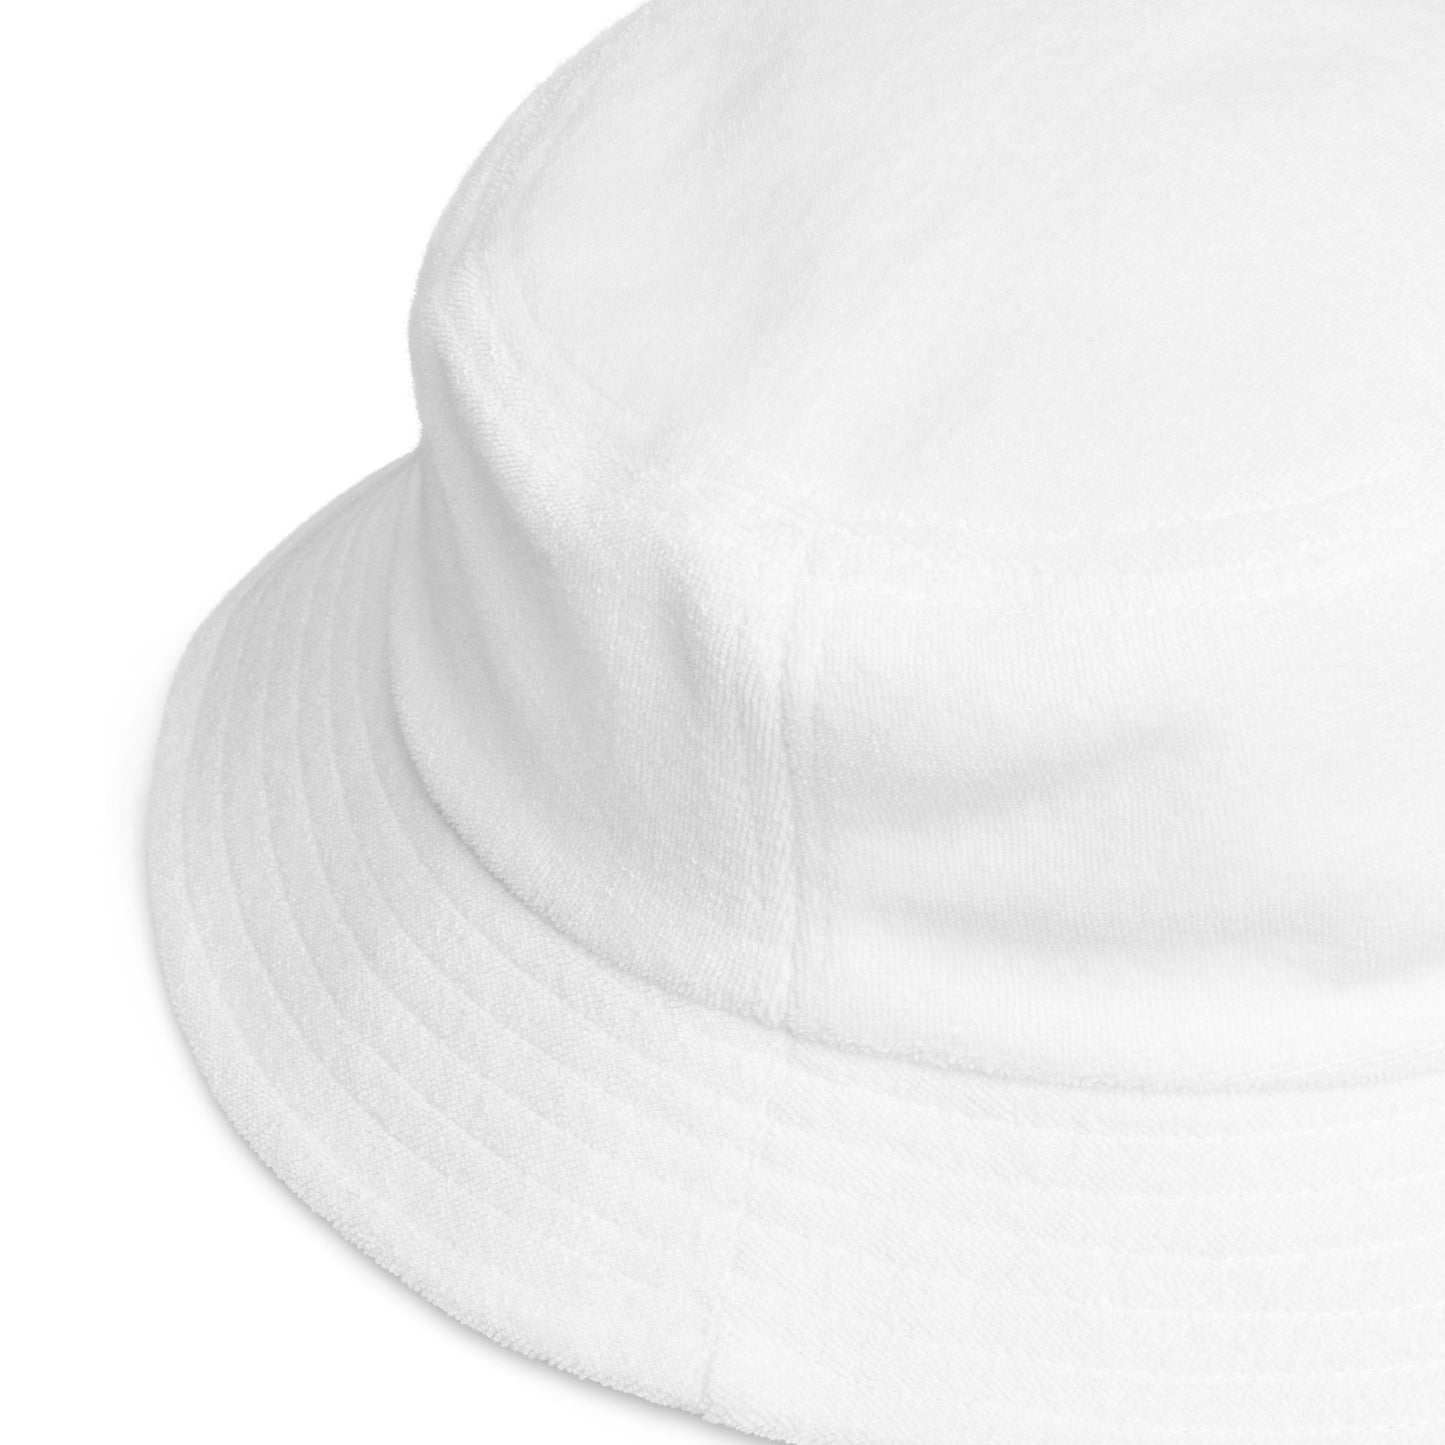 Unstructured terry cloth bucket hat - Swarez Multi Color